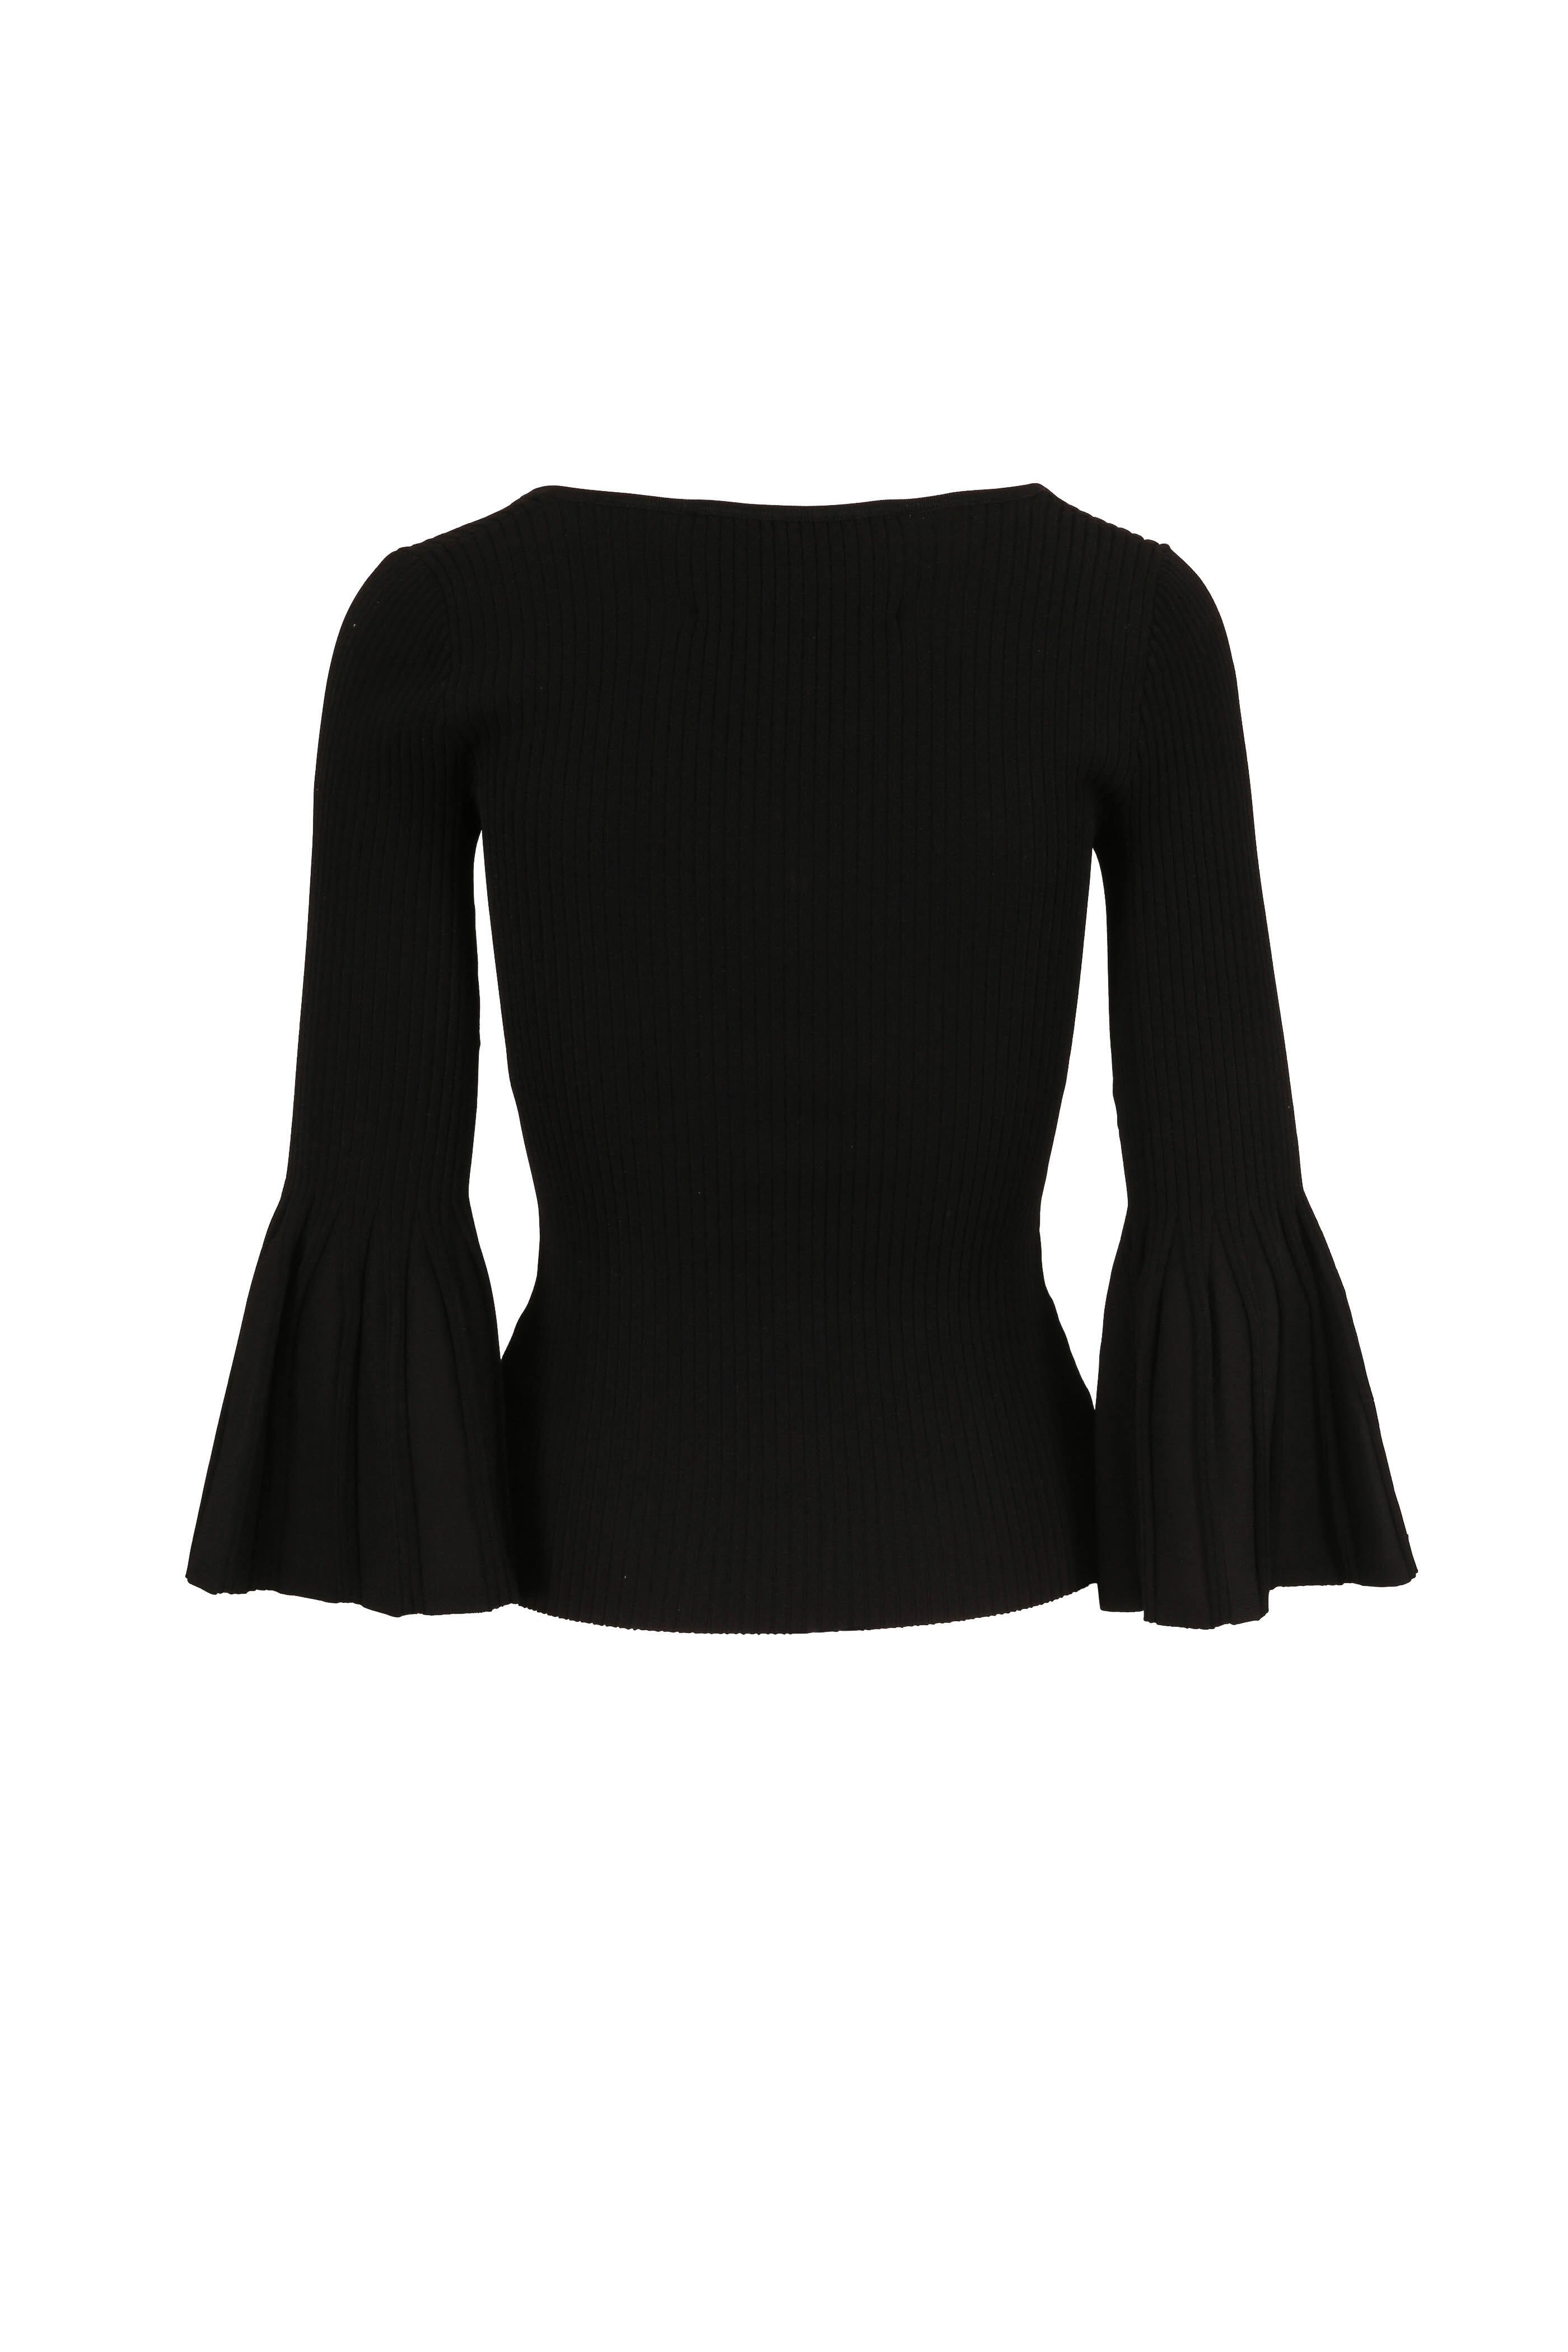 Carolina Herrera - Black Bell Sleeve Rib Knit Top